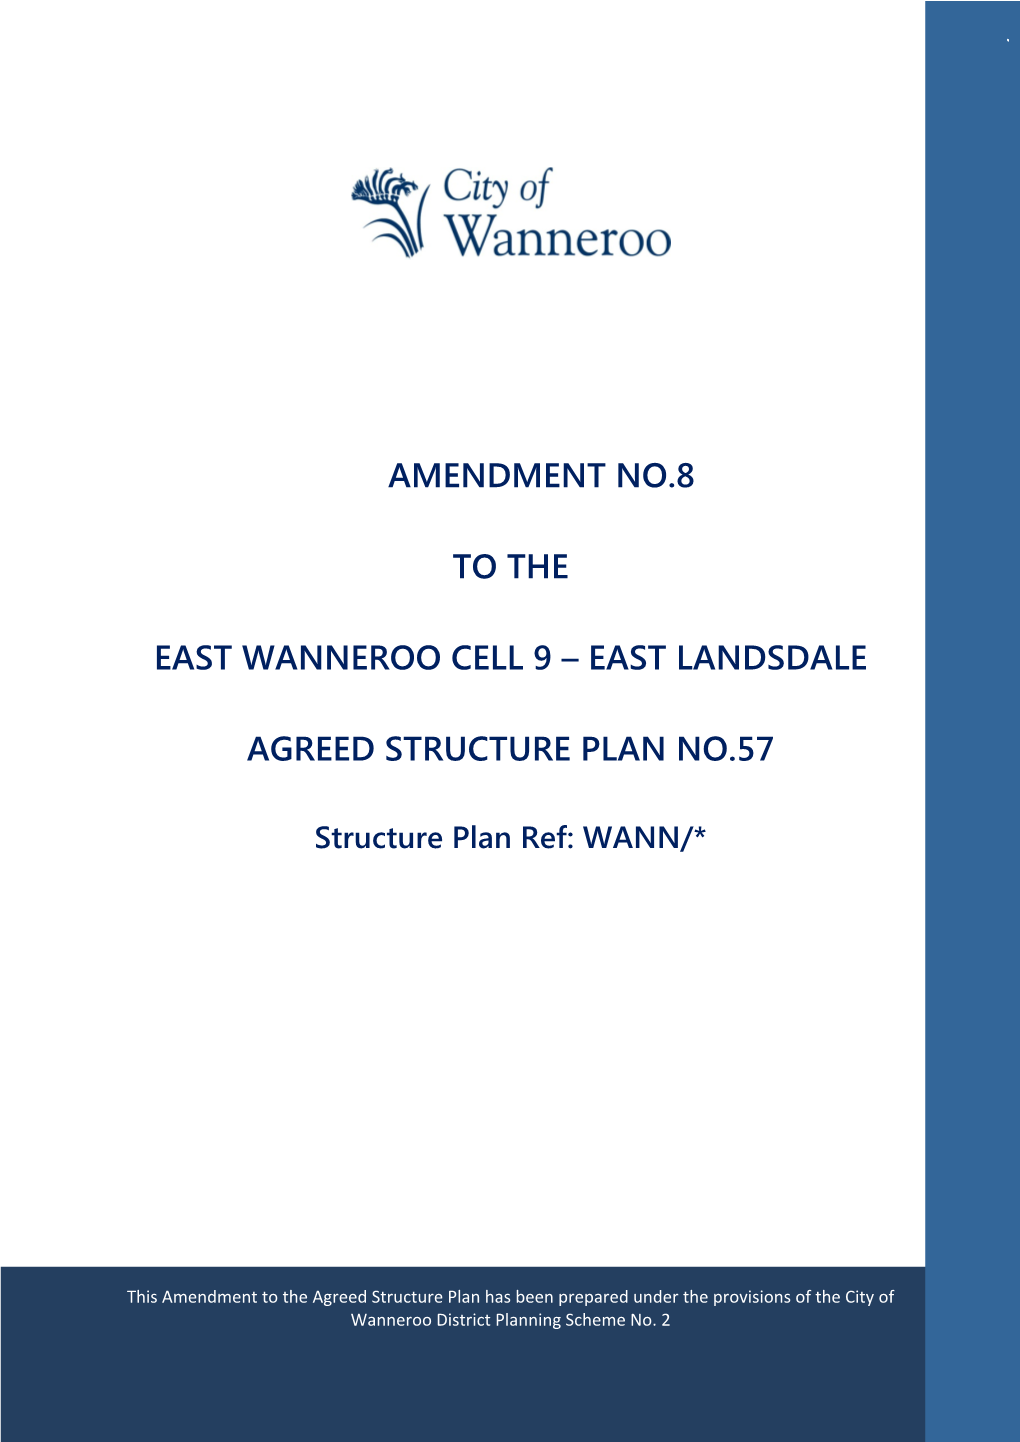 East Landsdale Agreed Structure Plan No.57